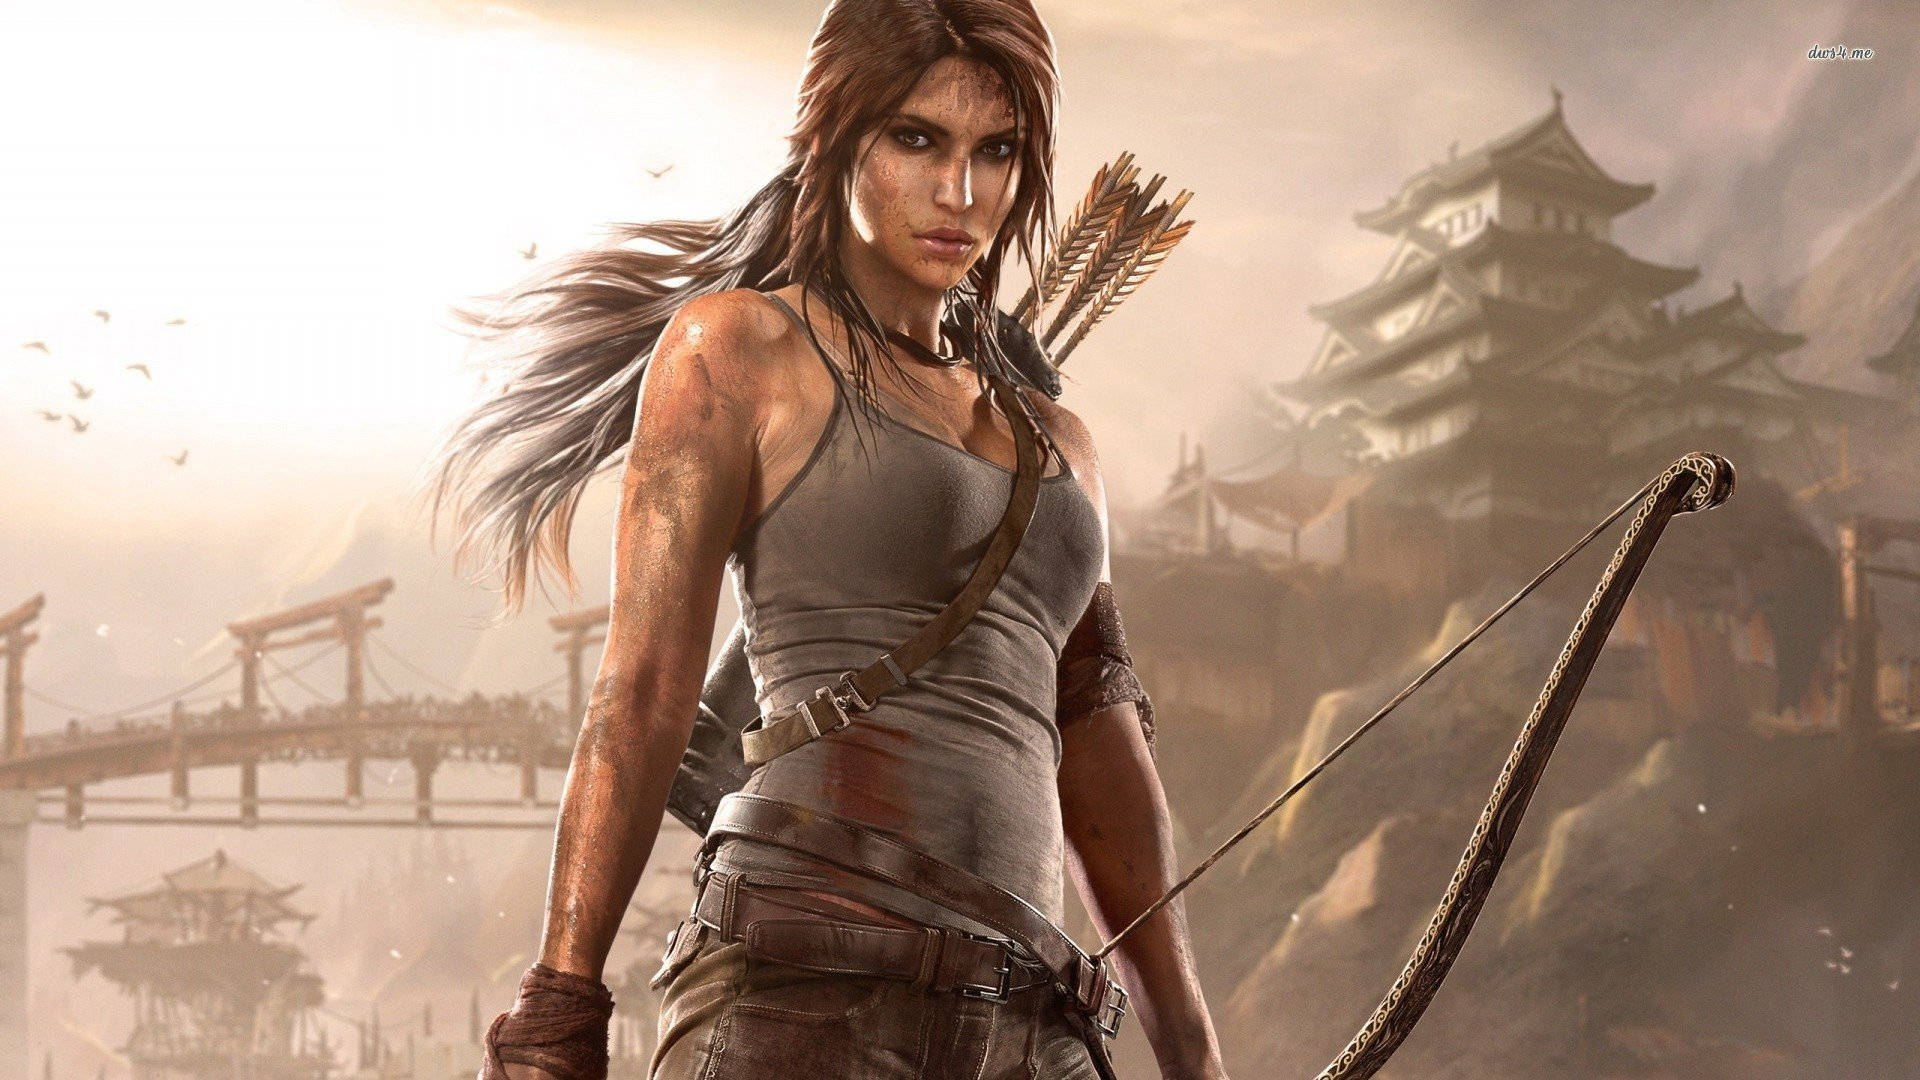 Fondode Pantalla Genial Del Juego De Tomb Raider Para Computadora. Fondo de pantalla